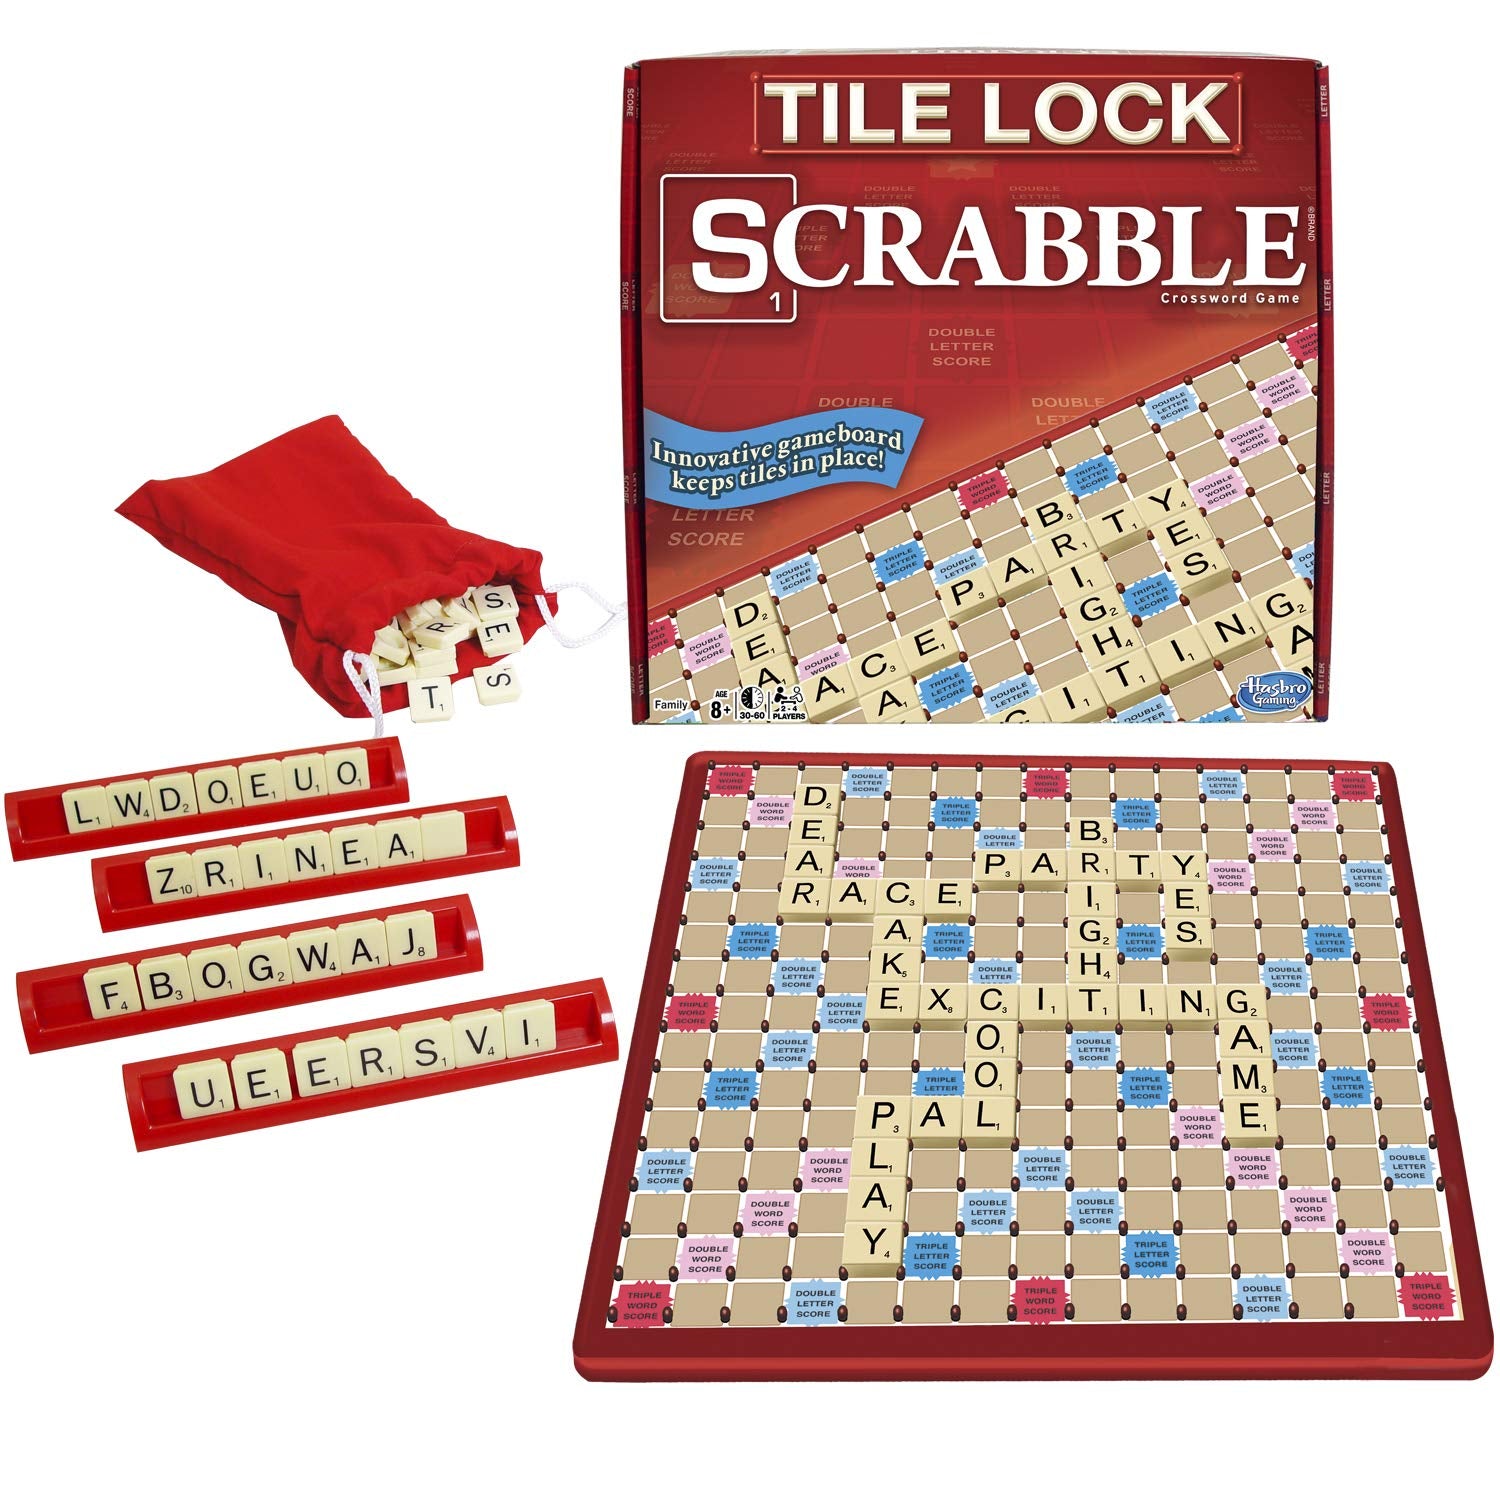 Tile Lock Scrabble by Hasbro